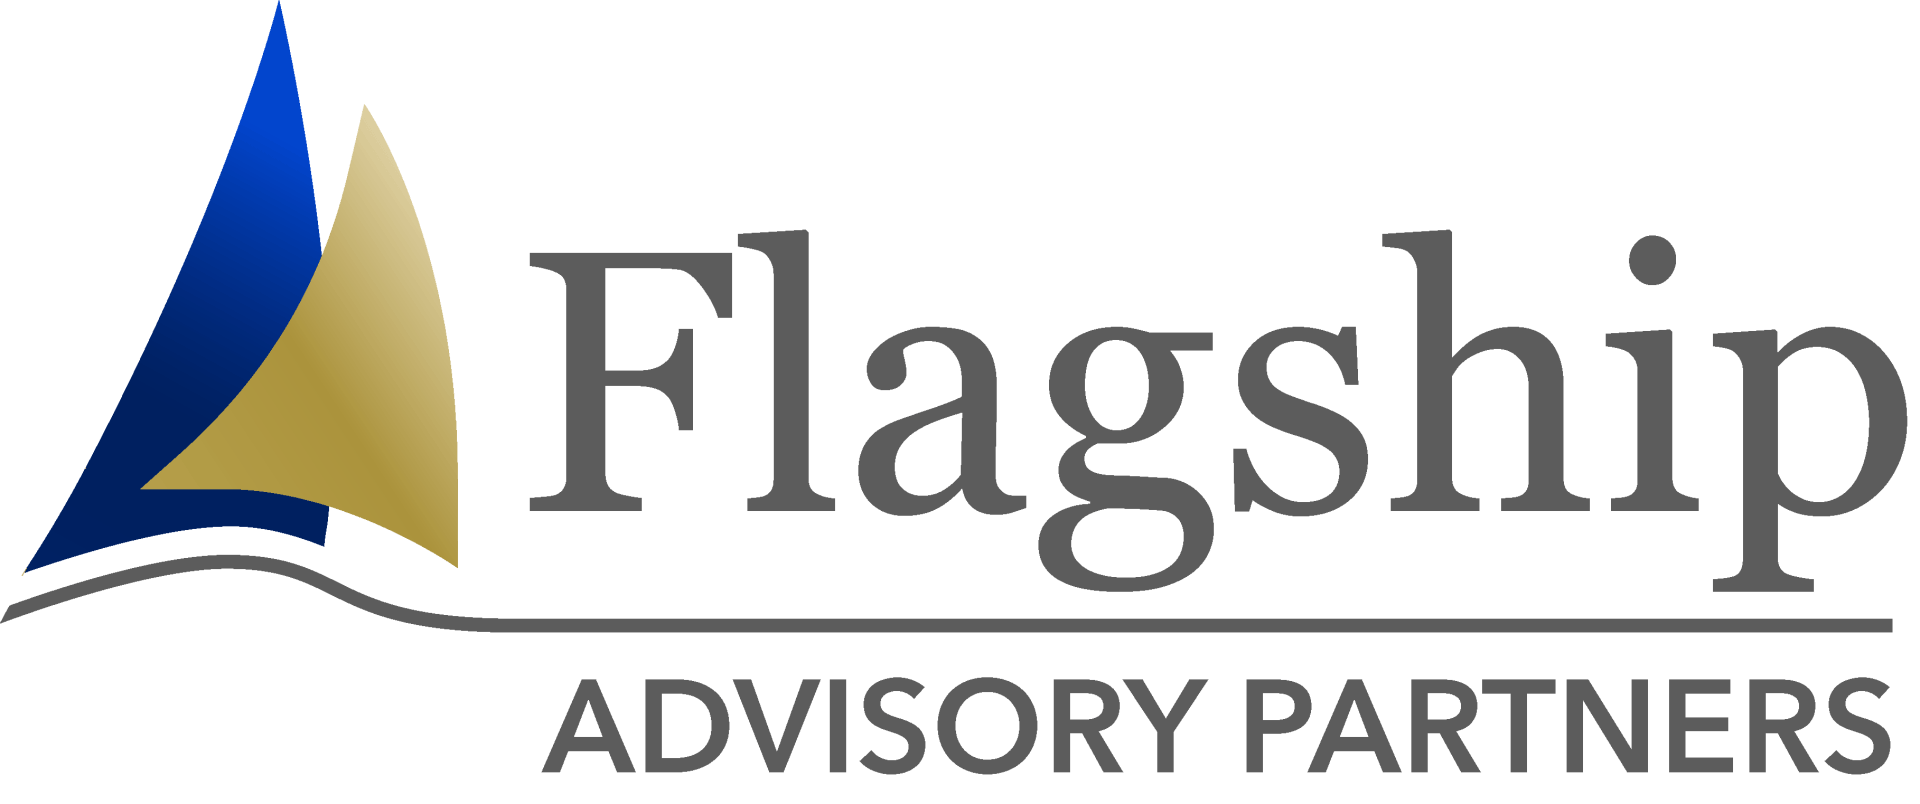 Flagship advisory partners